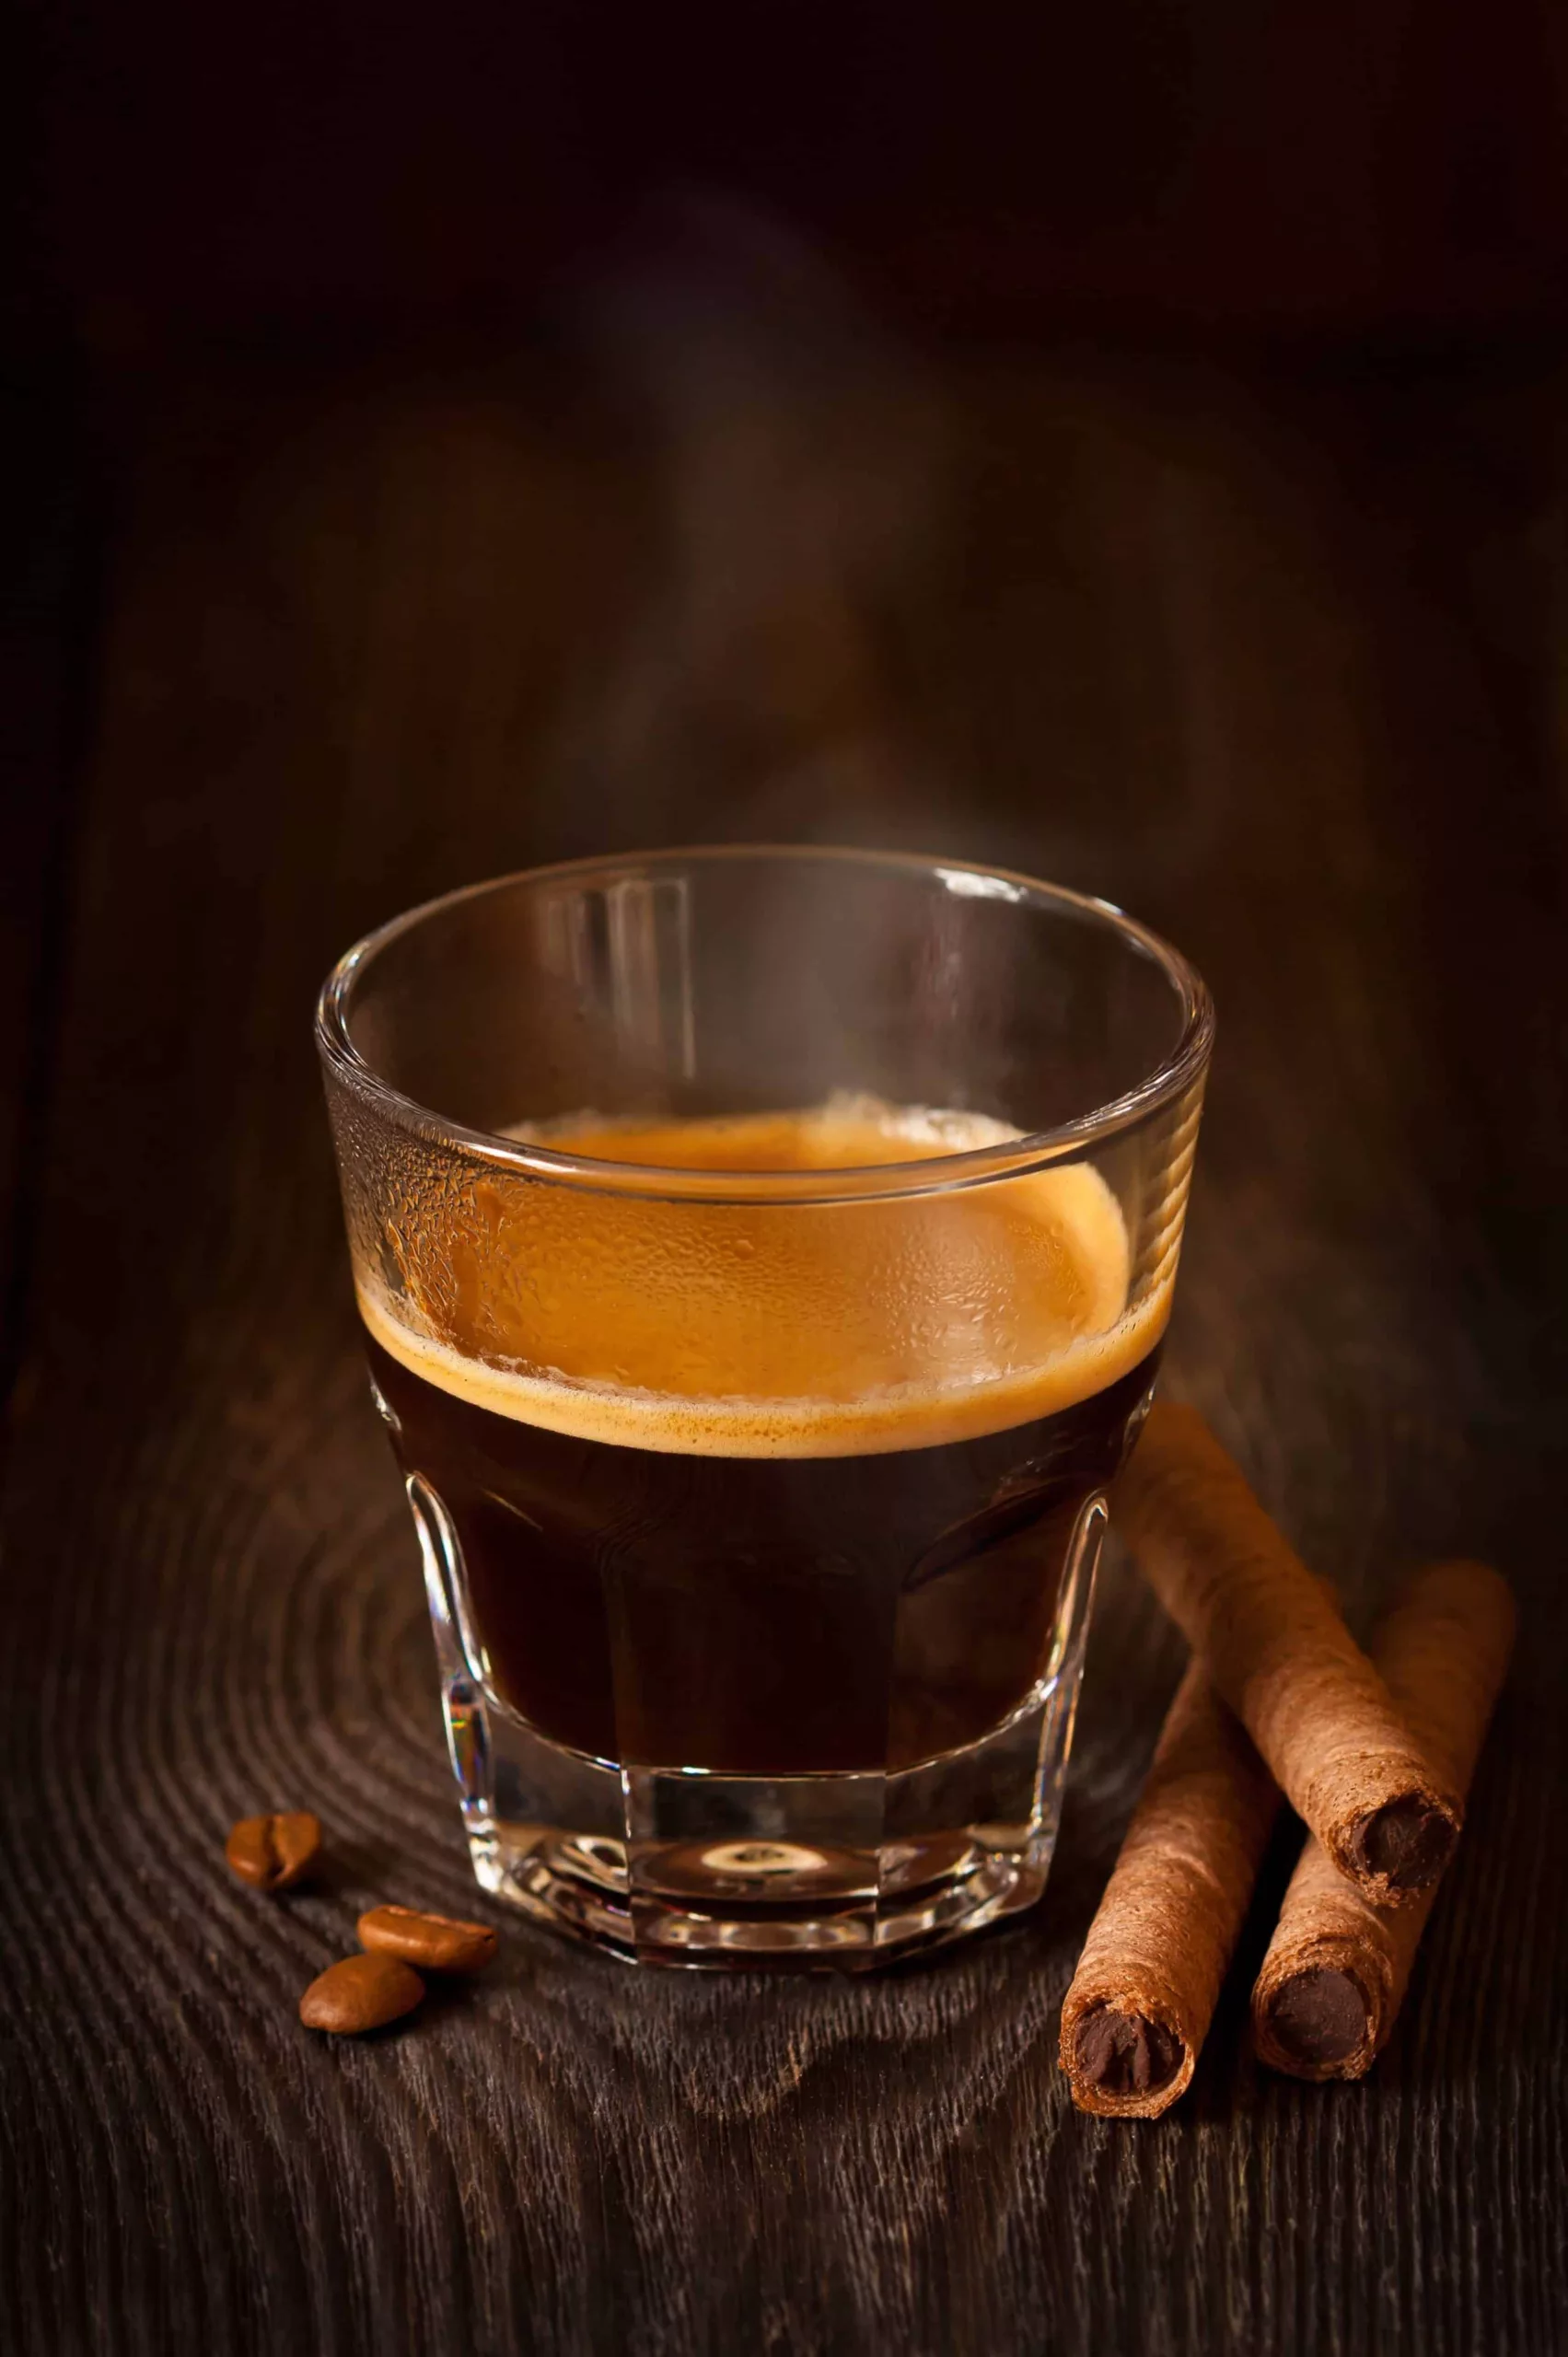 Espresso shot from an espresso machine; perfect for an Americano.